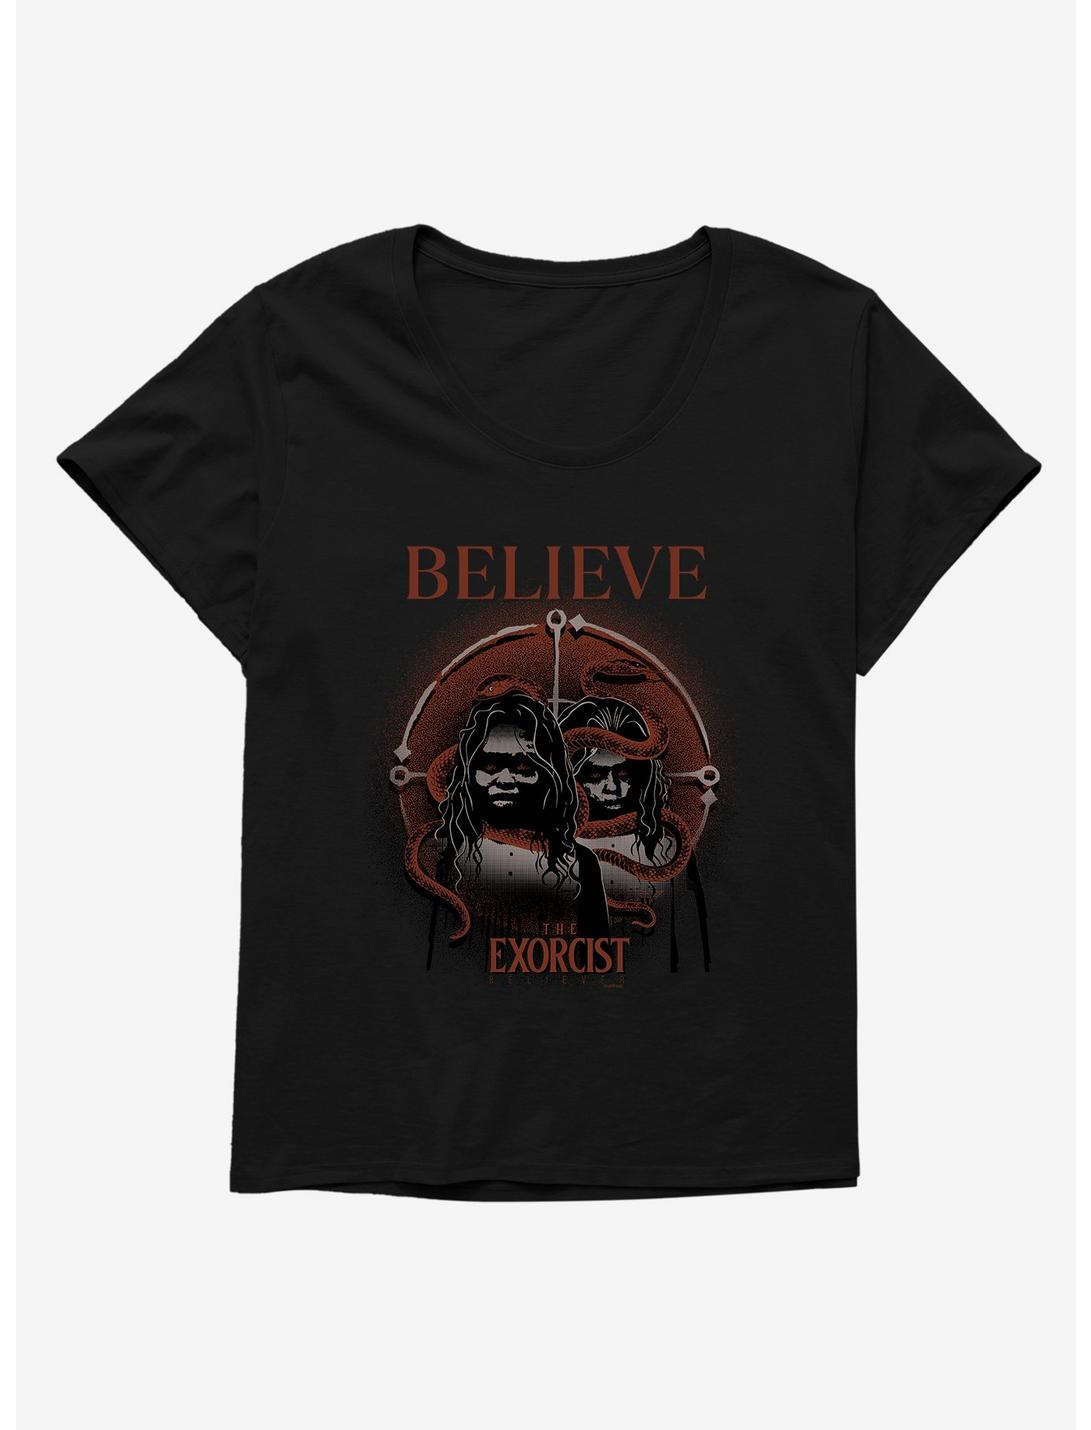 The Exorcist Believer Believe Girls T-Shirt Plus Size, BLACK, hi-res